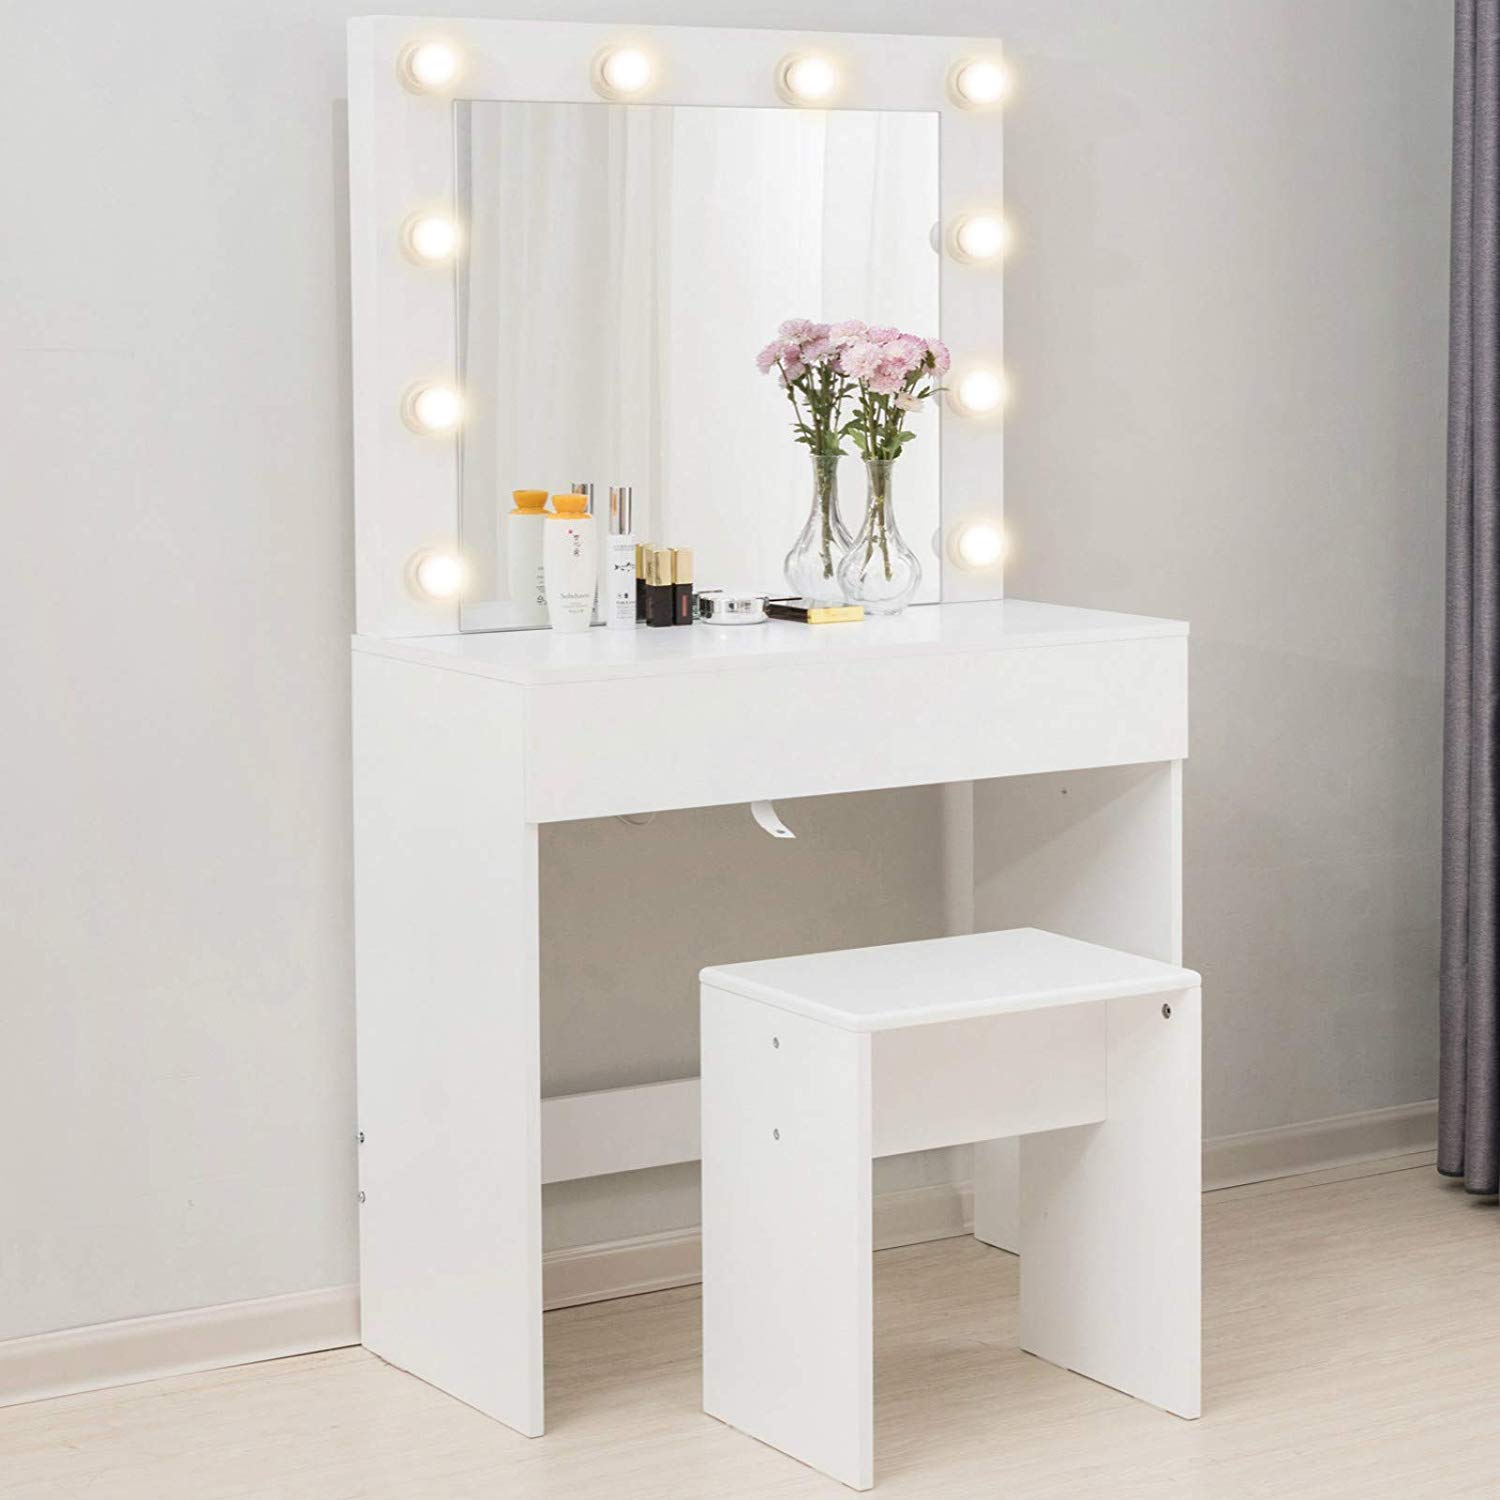 Beauty Makeup Vanity Table Chair Set Led Lights Mirror Dressing Desk White Furniture Tipidkorpolri Home Garden